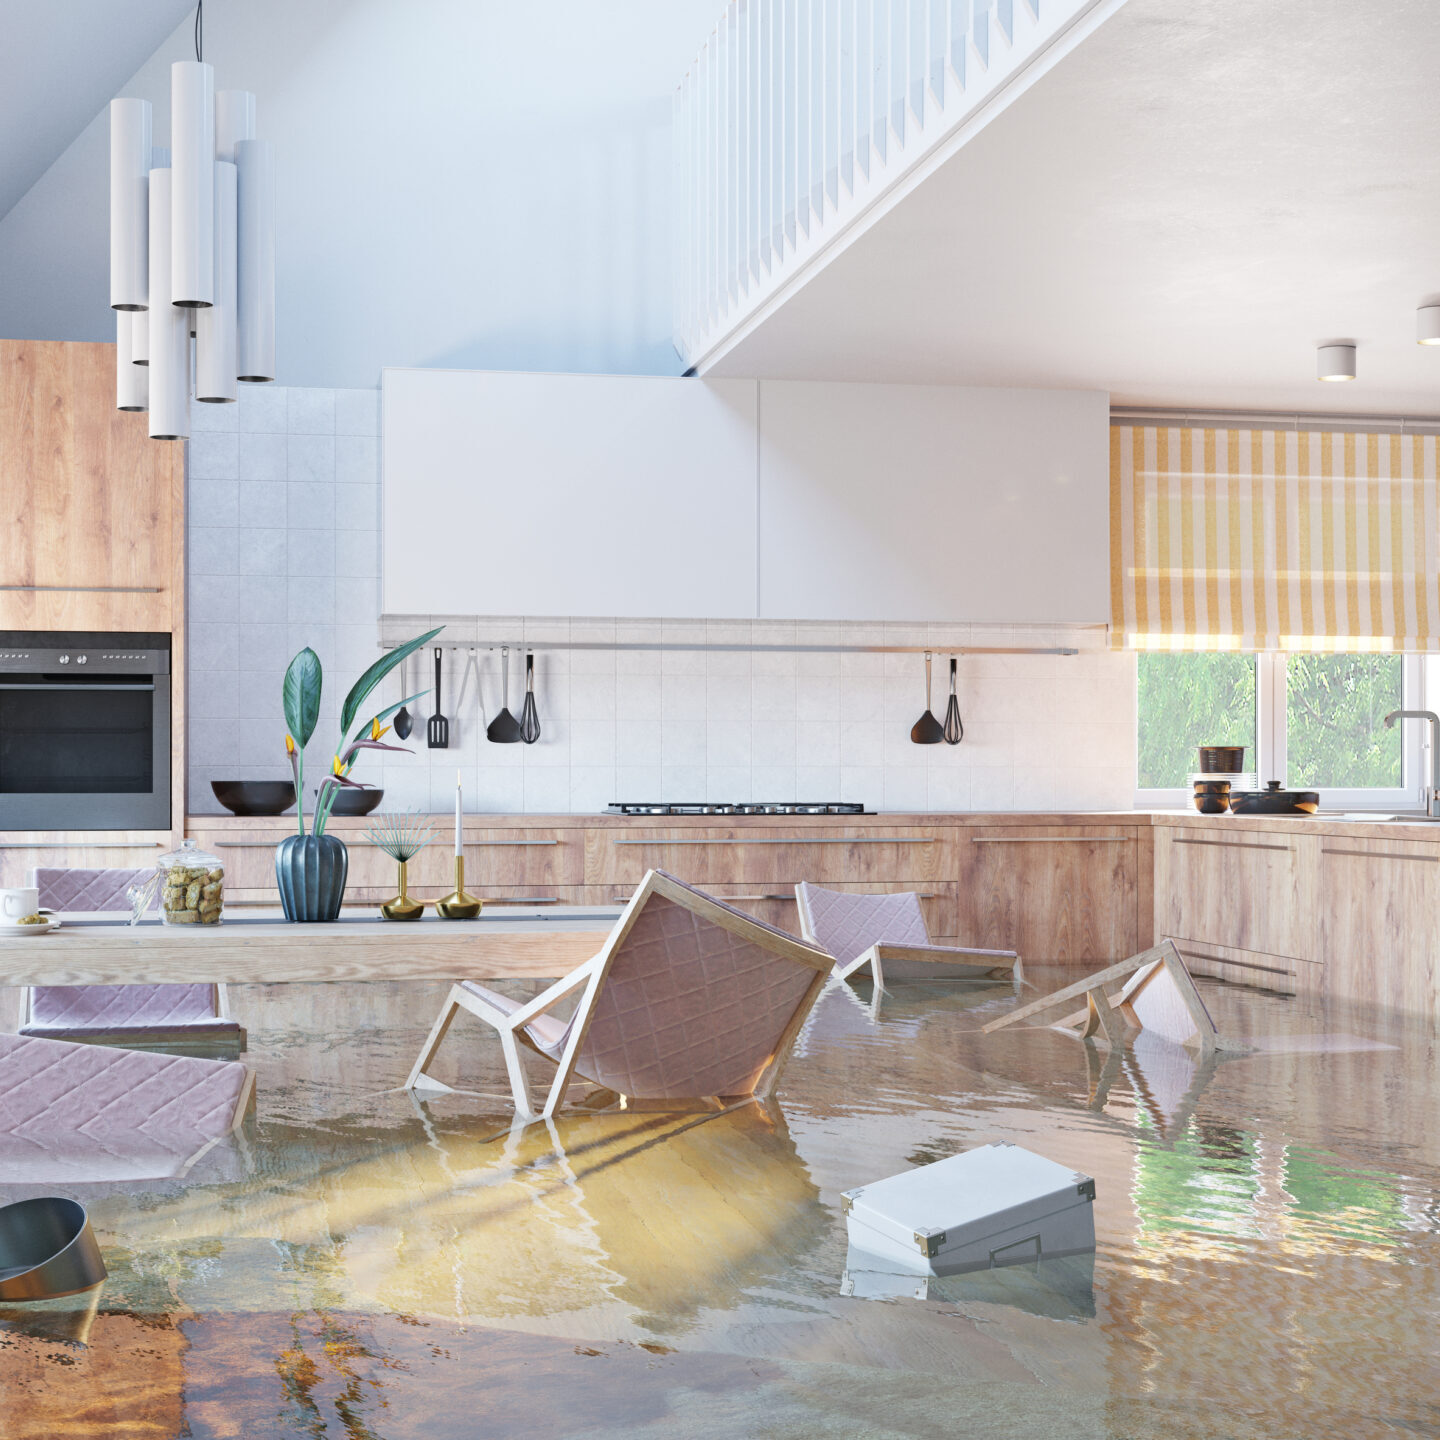 kitchen flooding interior. 3d rendering concept